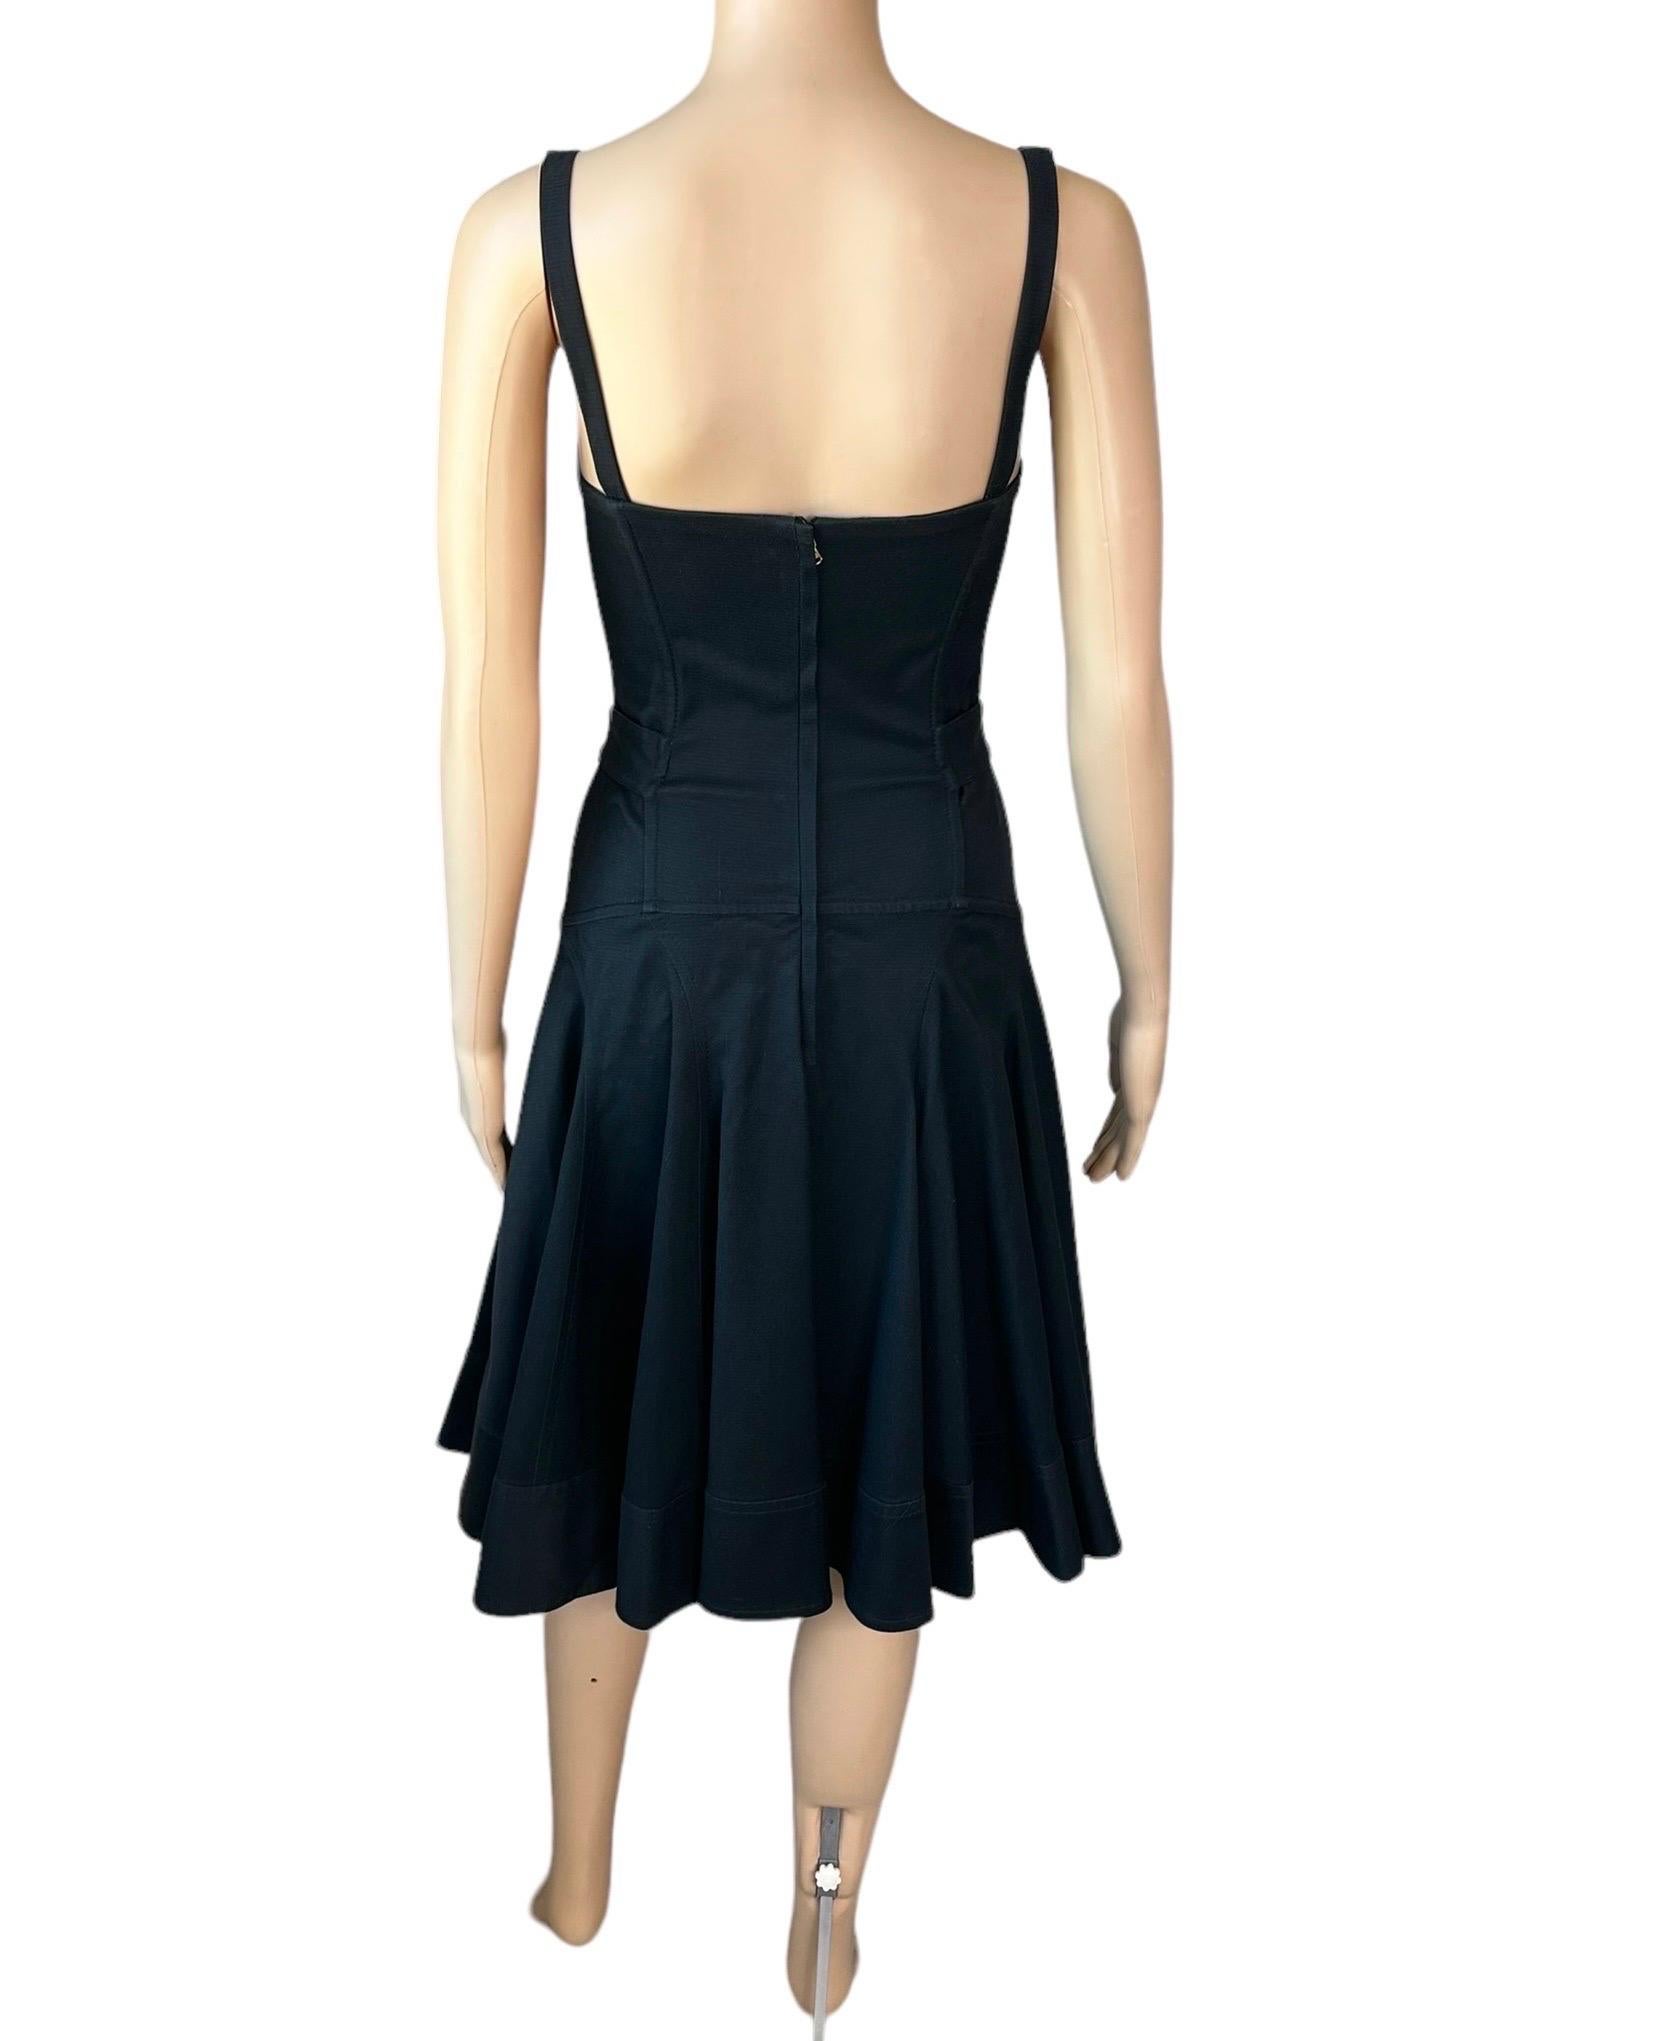 Dolce & Gabbana S/S 2007 Unworn Corset Lace-Up Bustier Black Dress For Sale 2